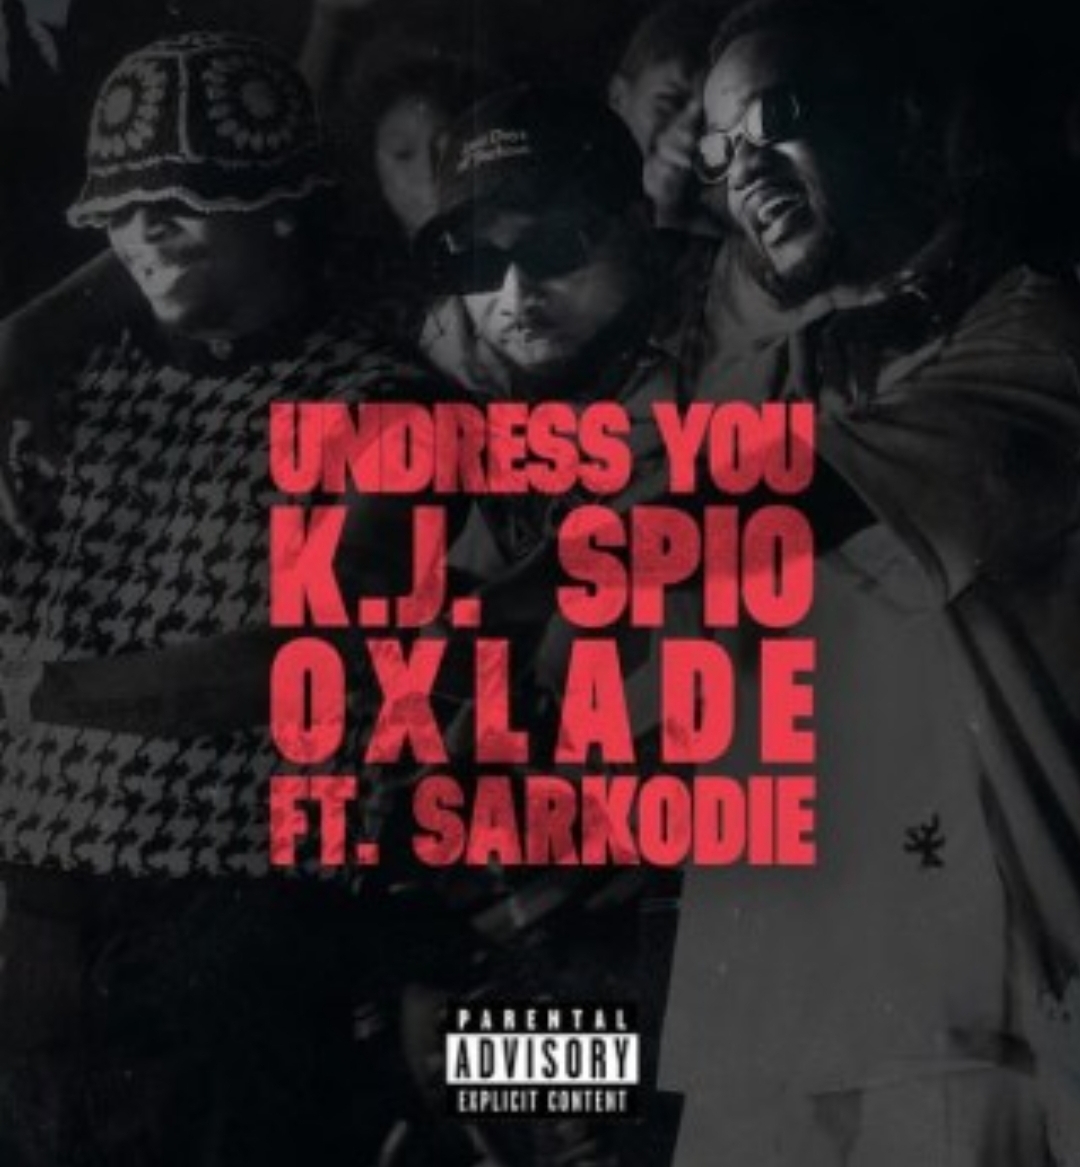 K.J Spio & Oxlade ft. Sarkodie – Undress You